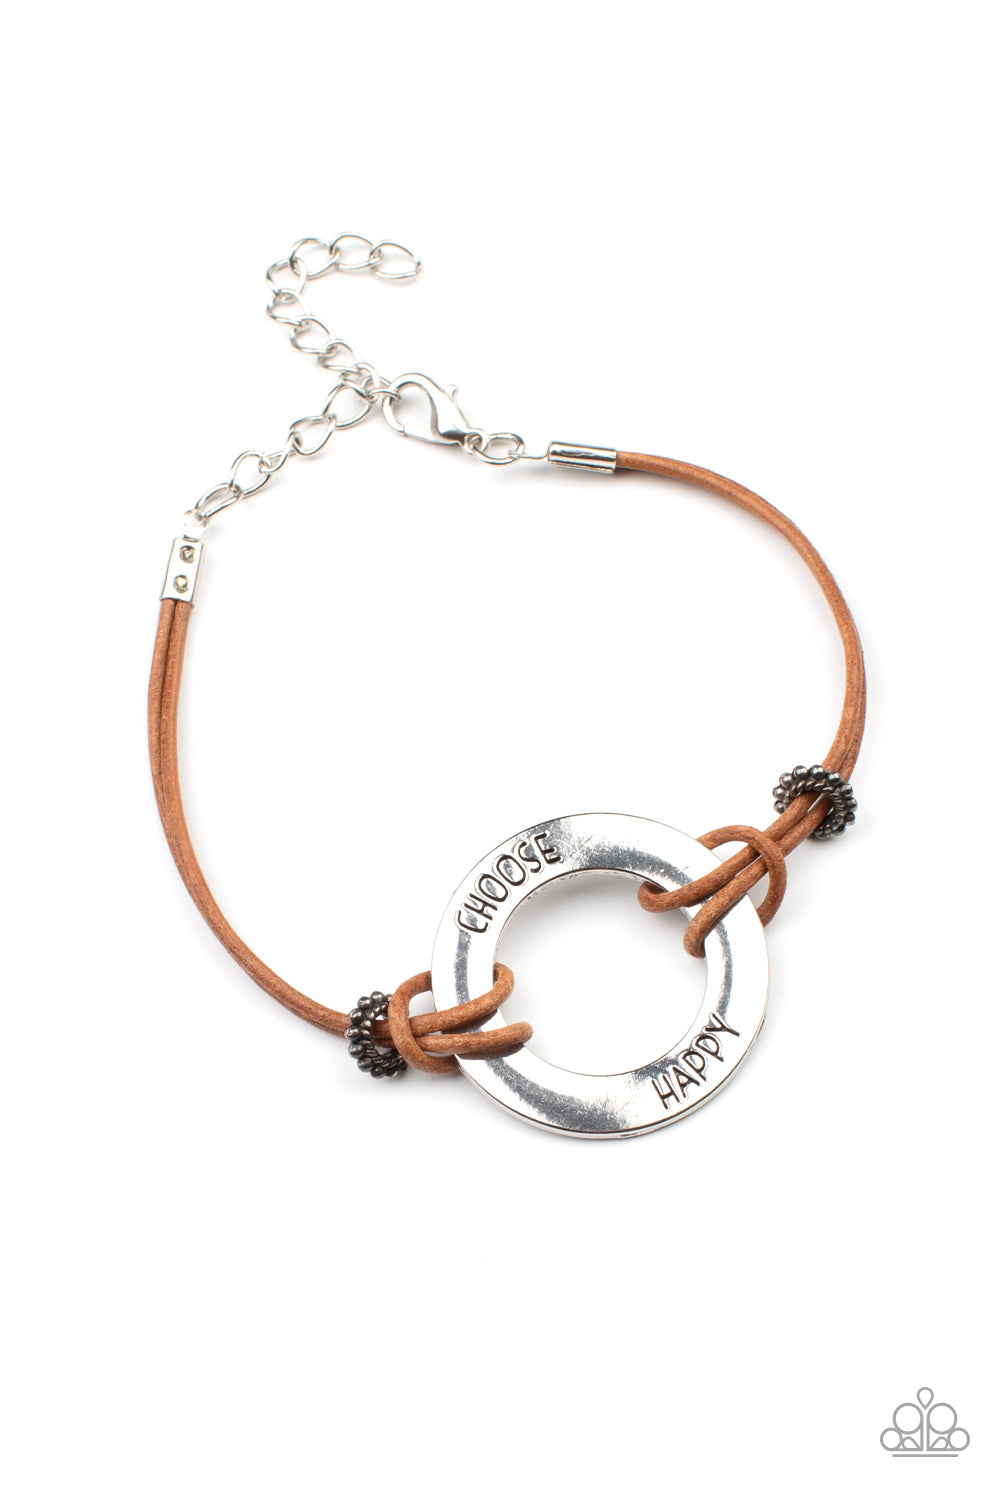 Choose Happy - Brown Bracelet freeshipping - JewLz4u Gemstone Gallery